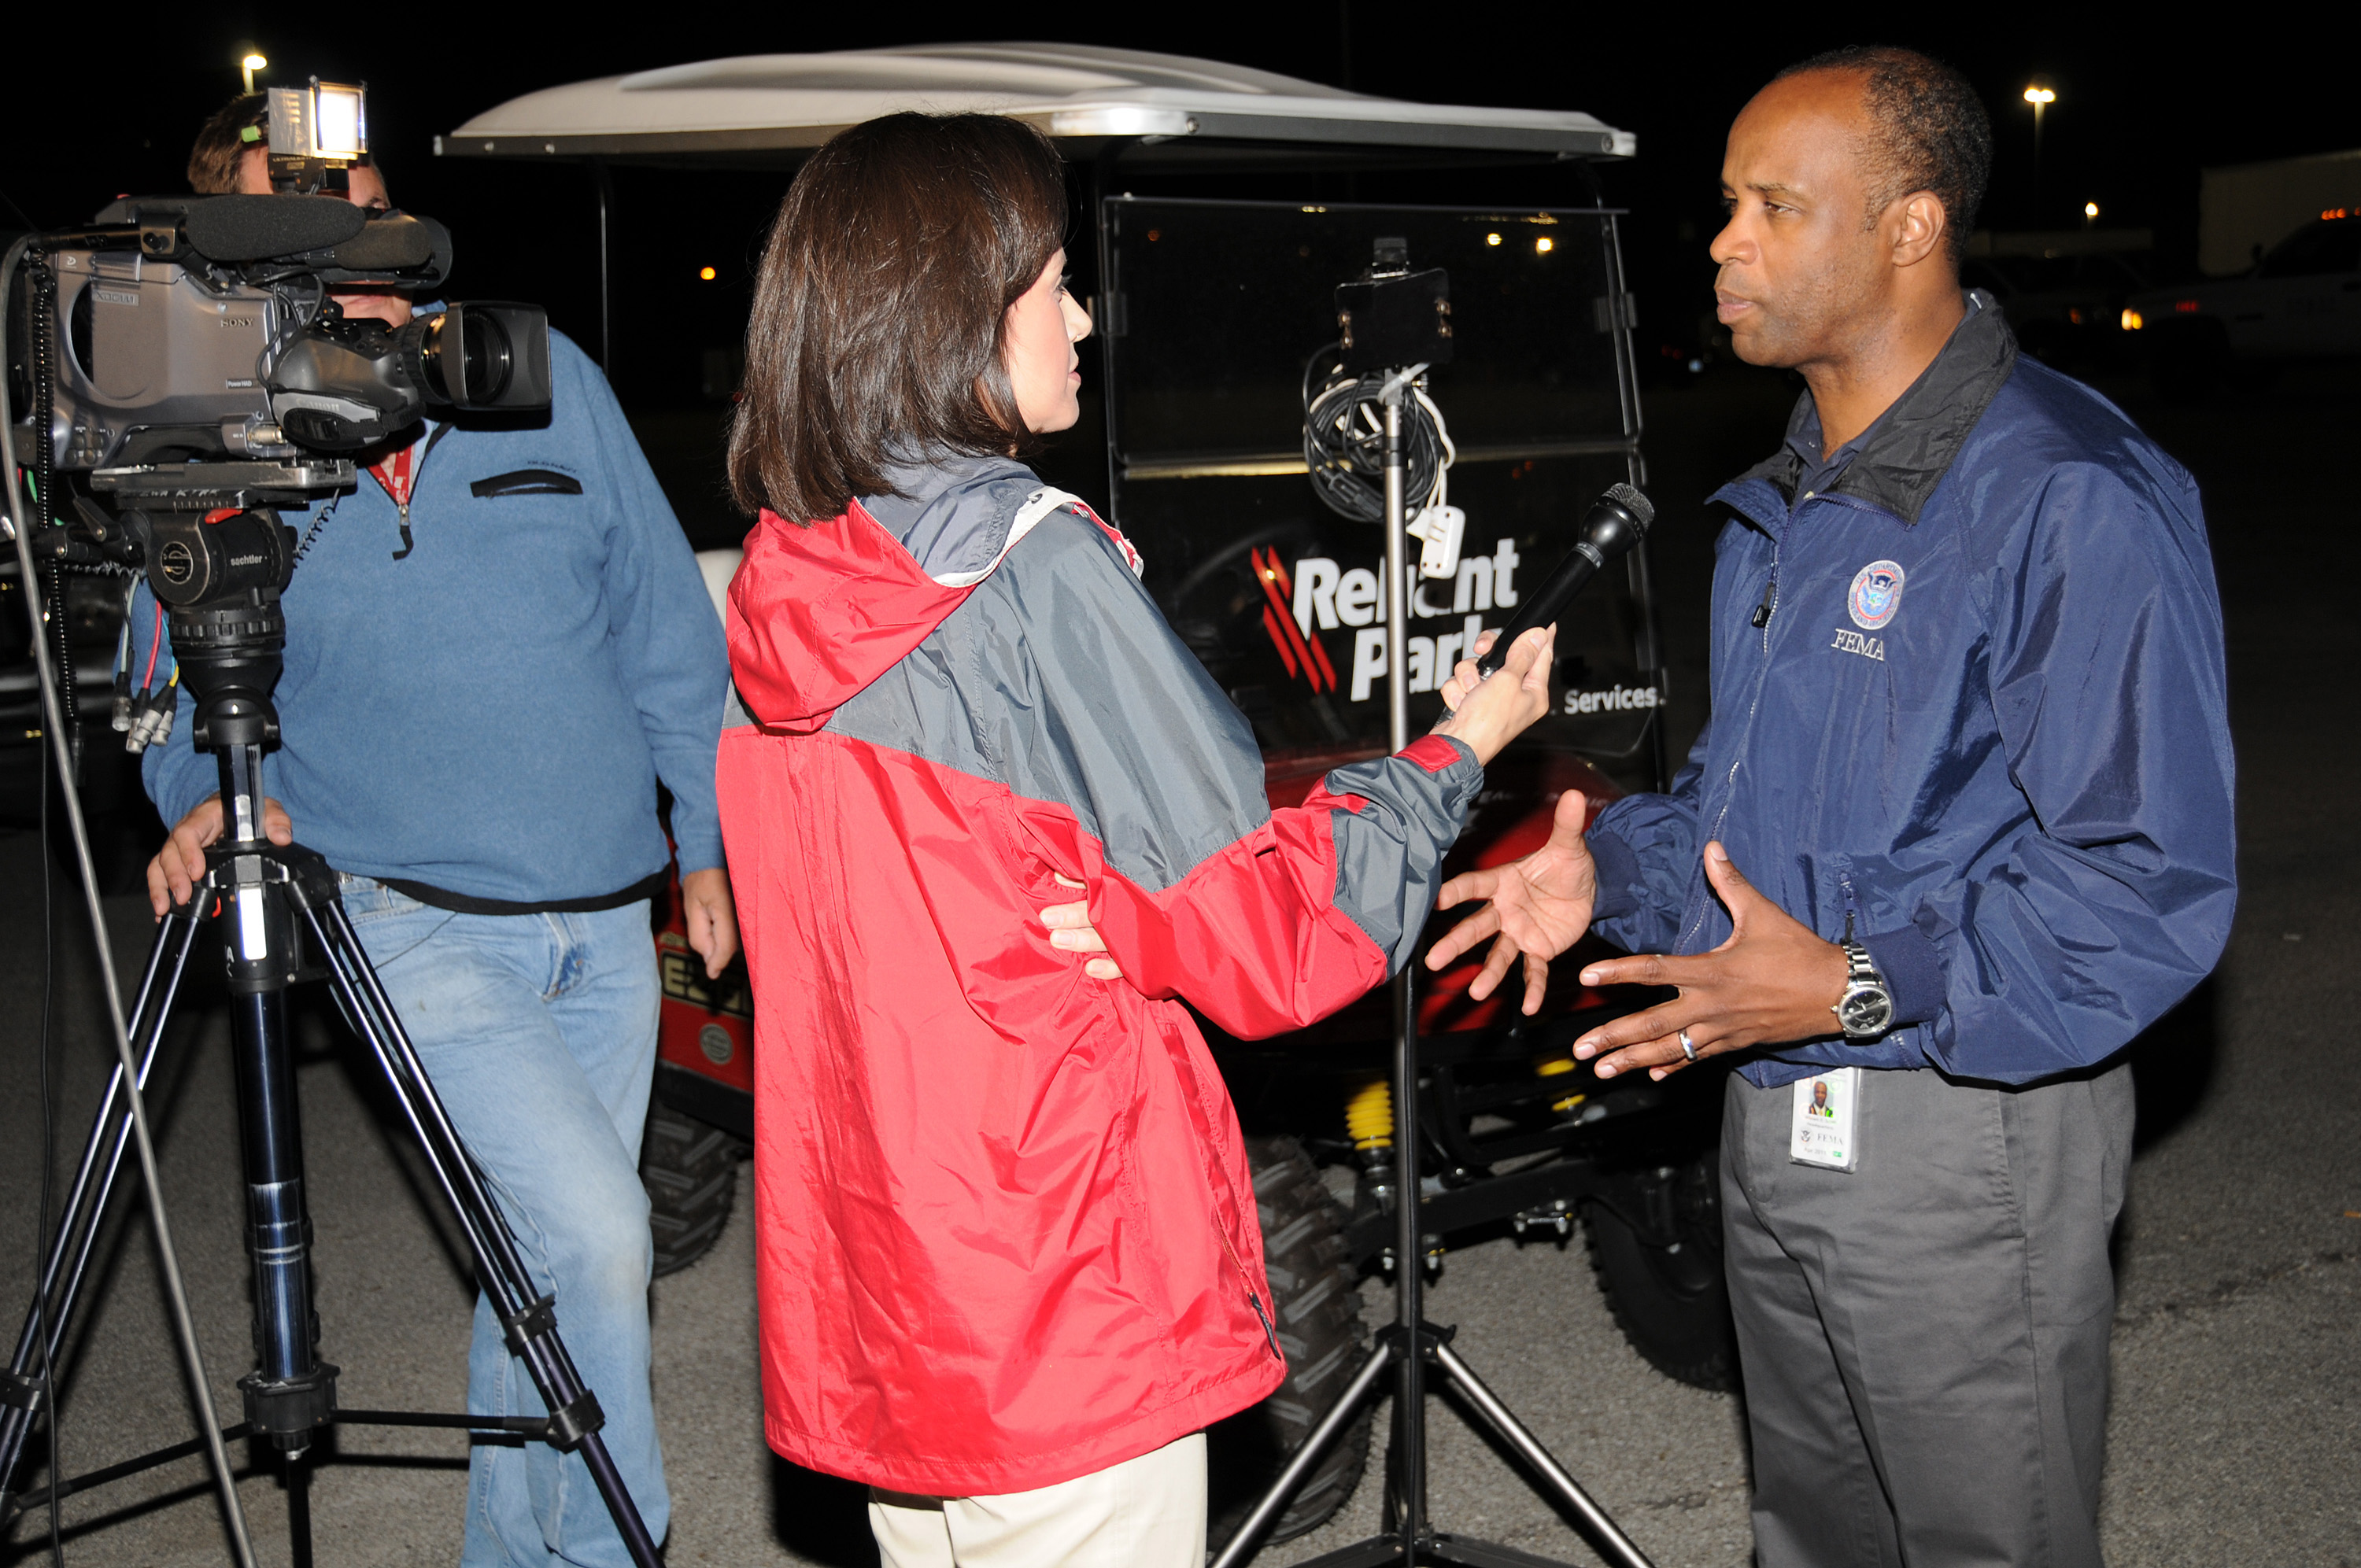 TV reporter interviews FEMA expert. Image: Walter Jennings/FEMA Photo Library via Wikimedia